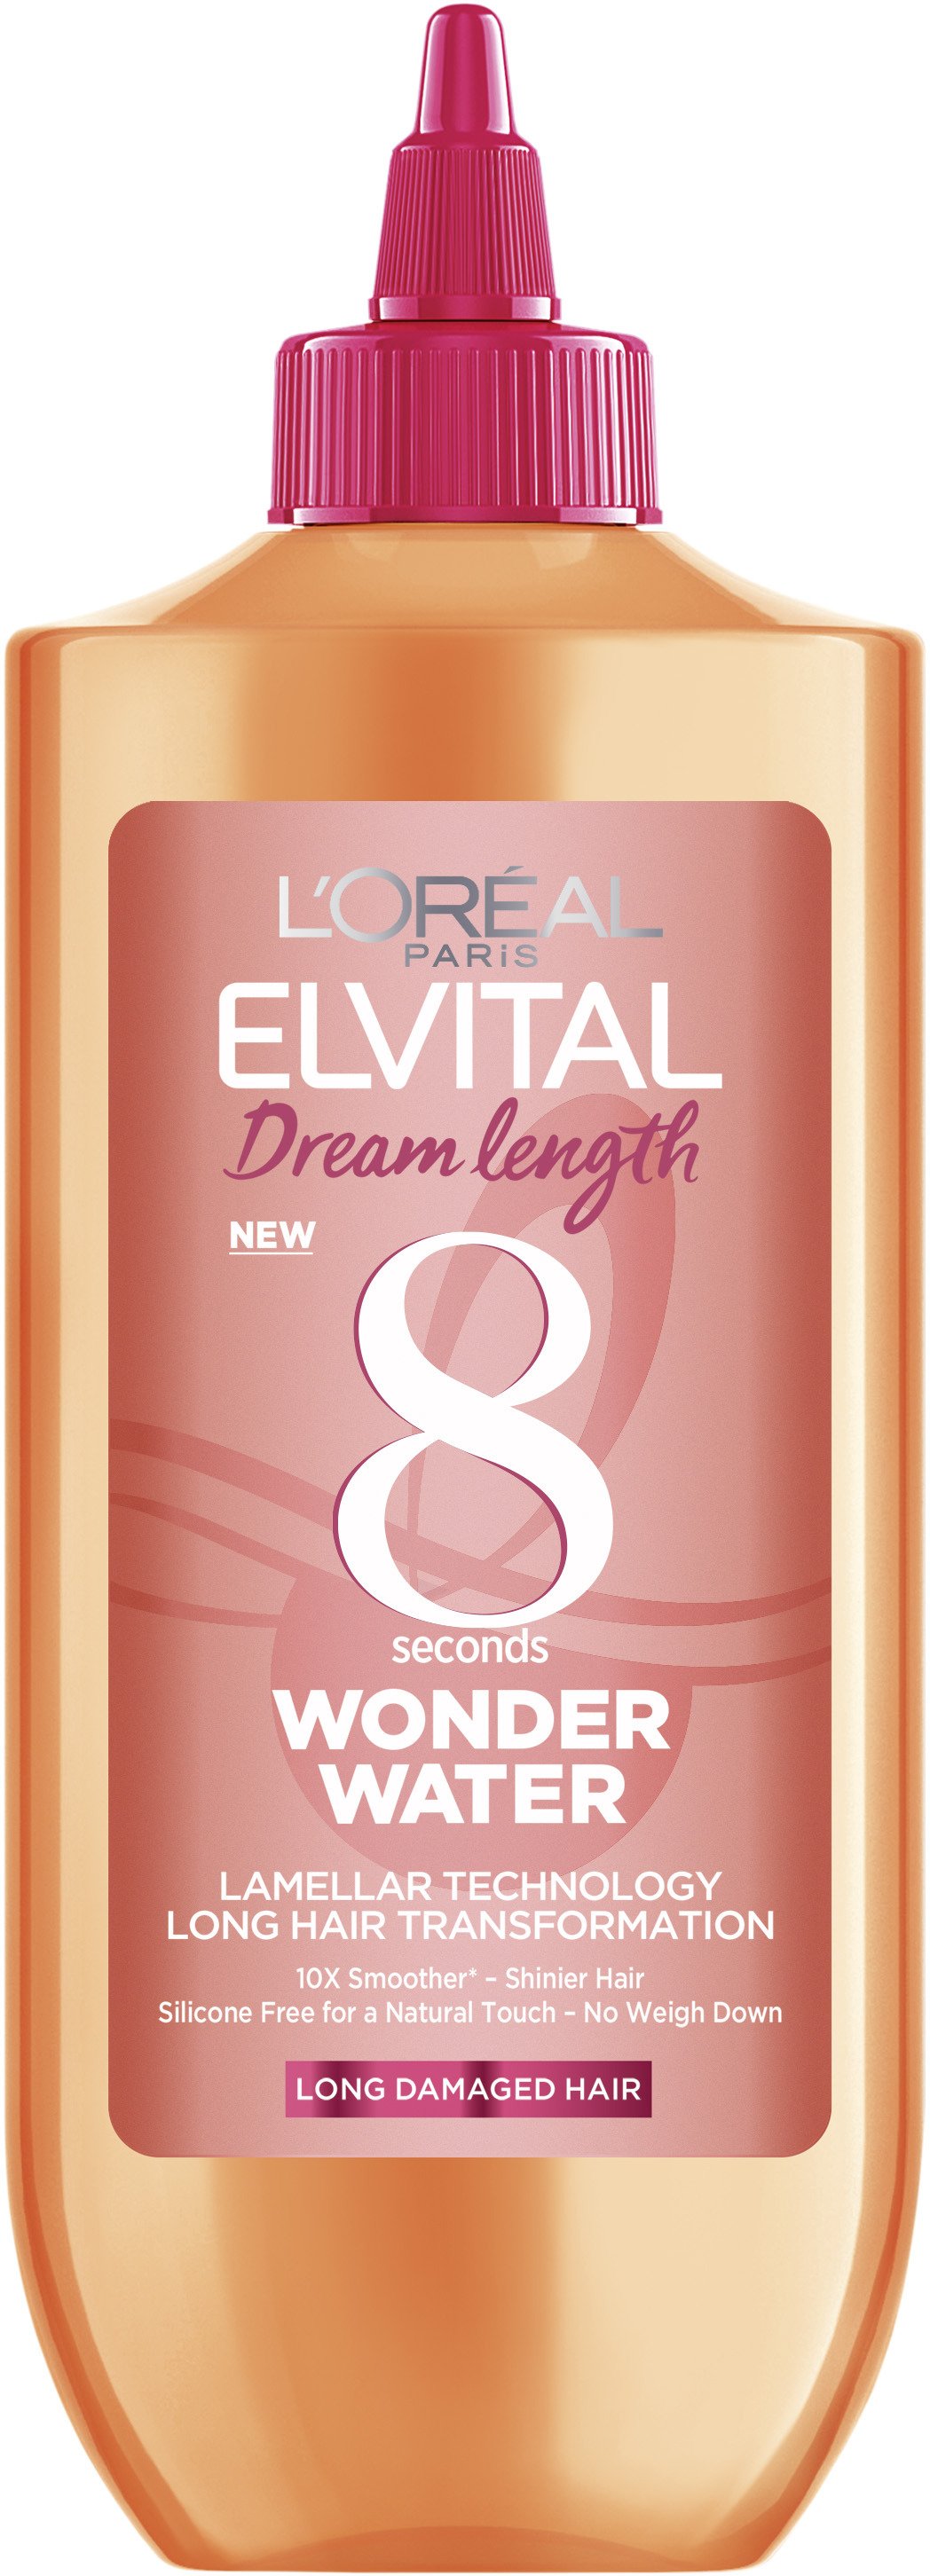 L'Oréal Paris Elvital Dream Lenght 8 Sec Wonder Water 200 ml